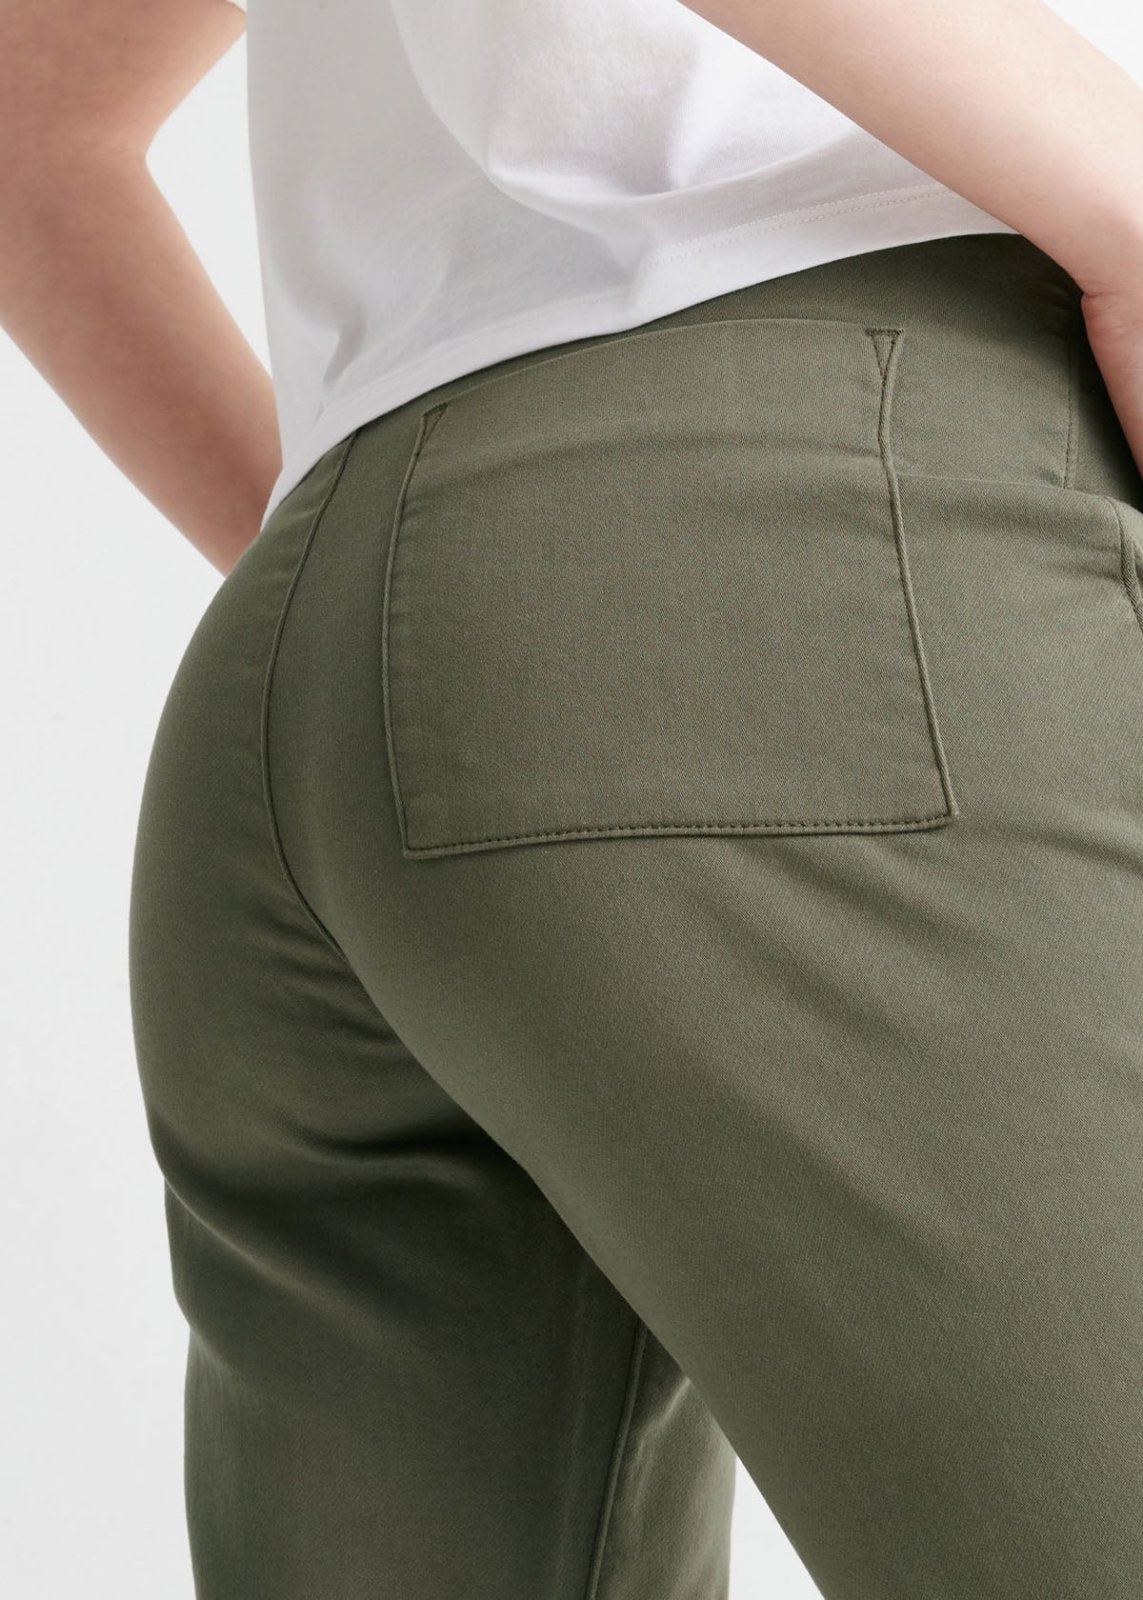 Women's Green Sweatpant Back